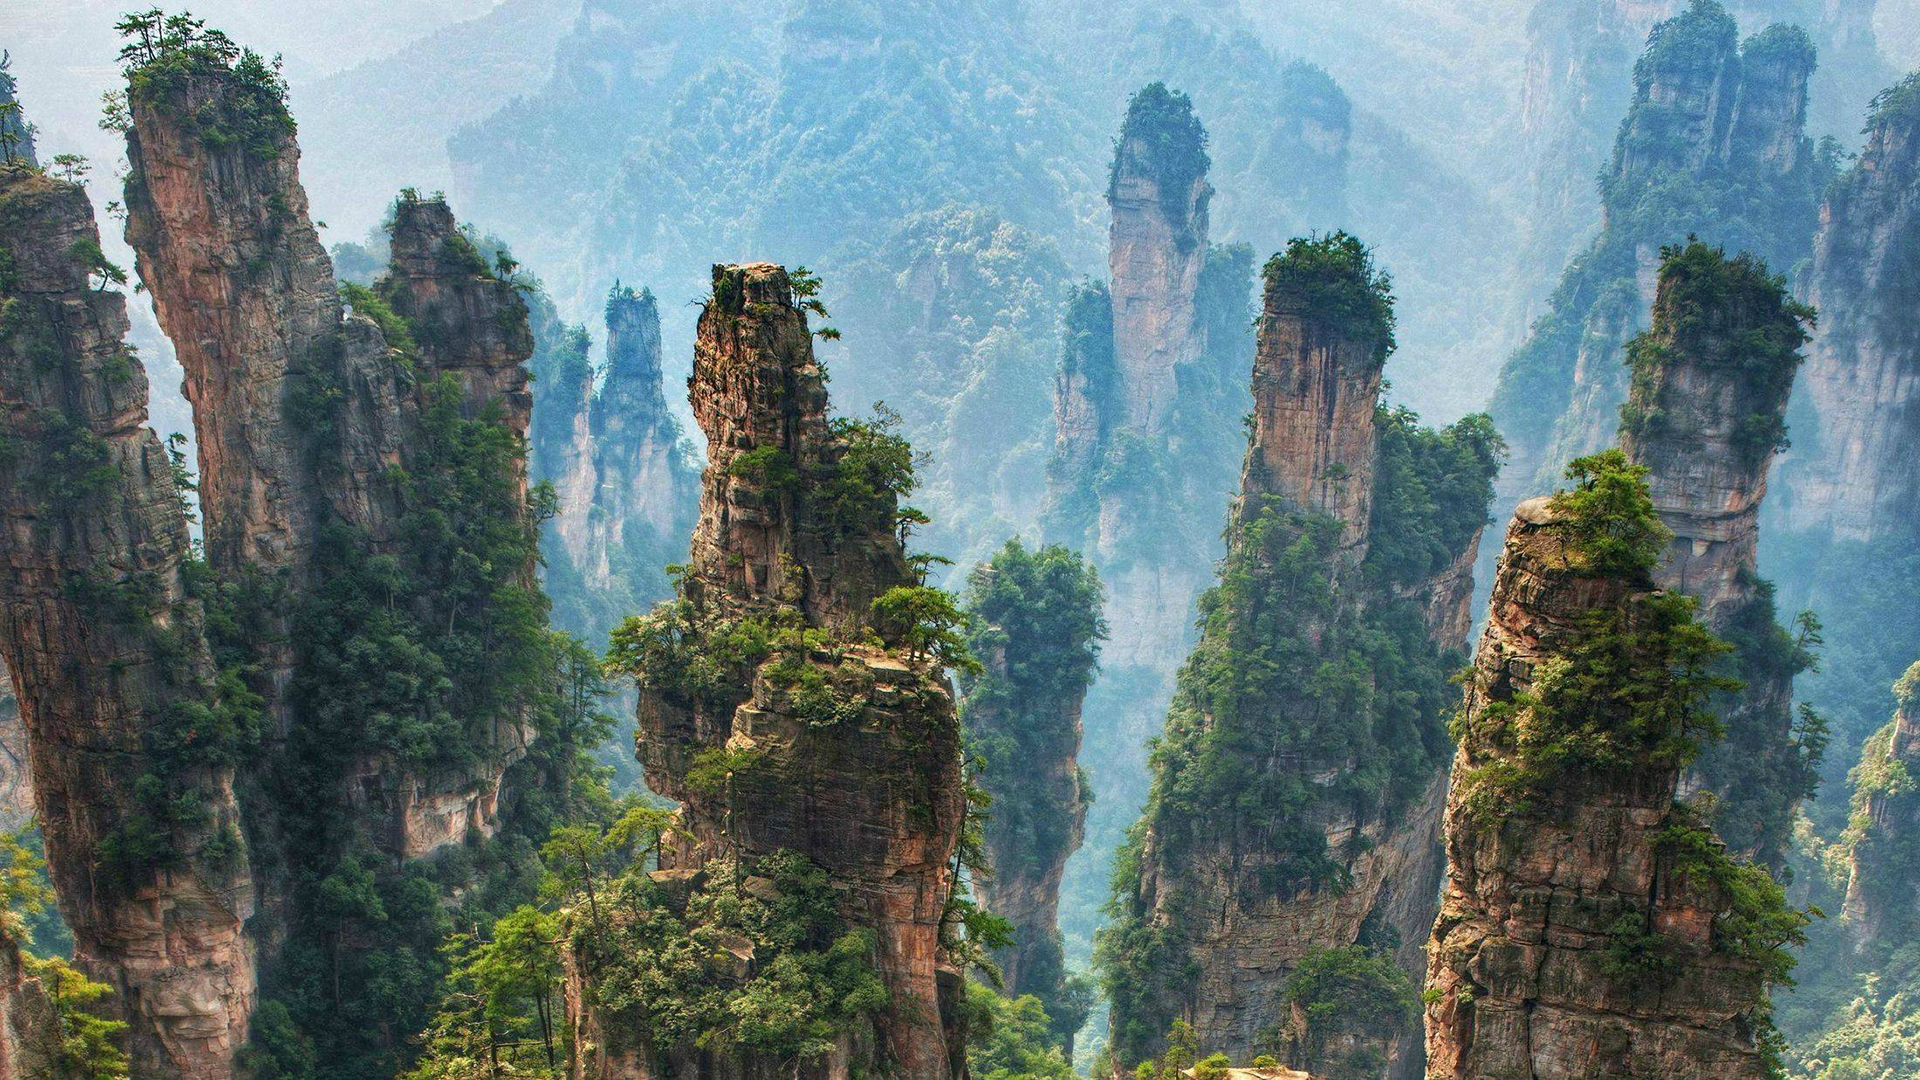 Zhangjiajie National Park – Avatar’s Hallelujah Mountains on Earth